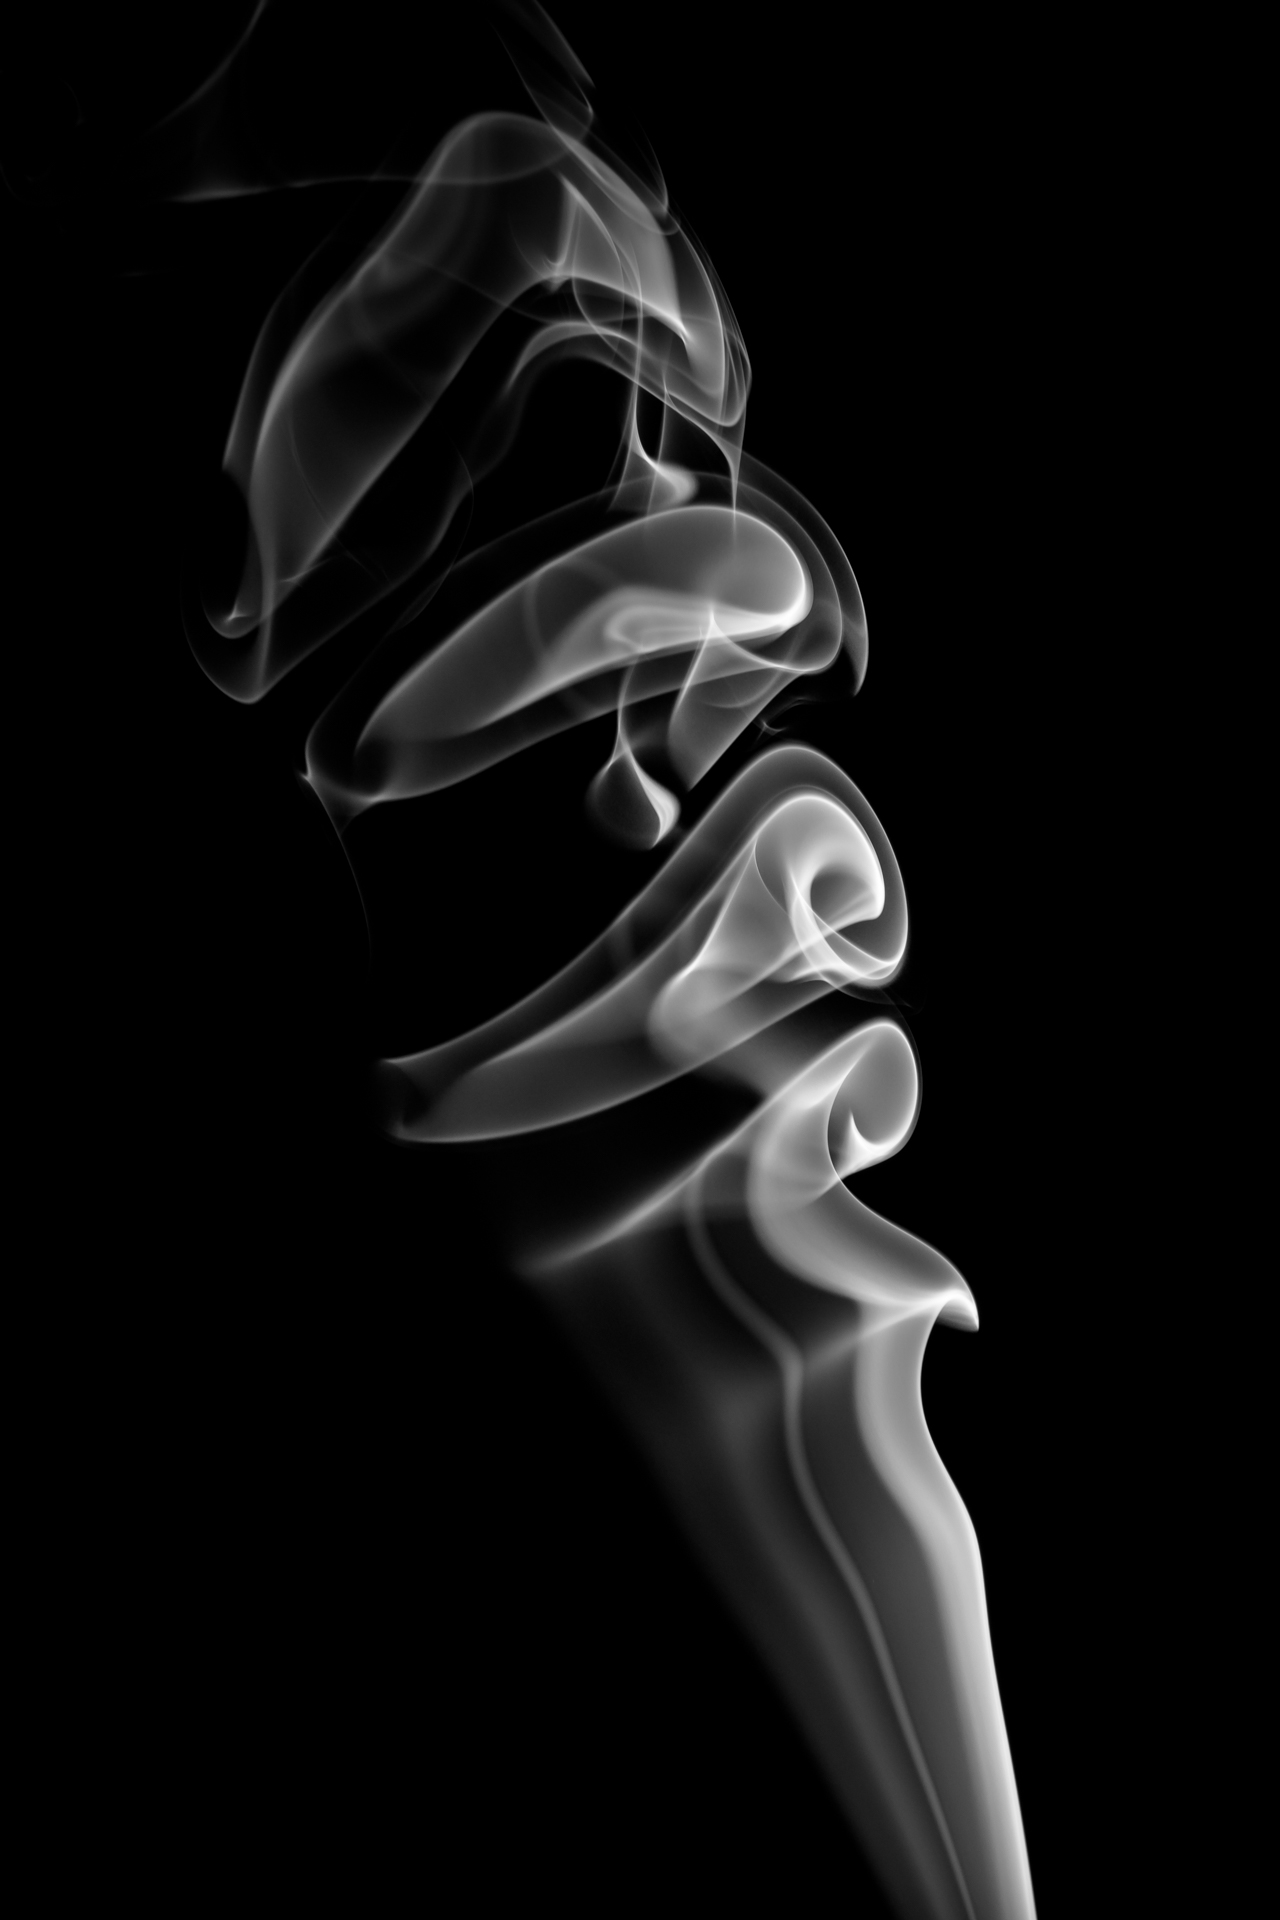 https://www.renetimmermans.com/blog/wp-content/uploads/2020/11/smoke-bw-series-7936.jpg